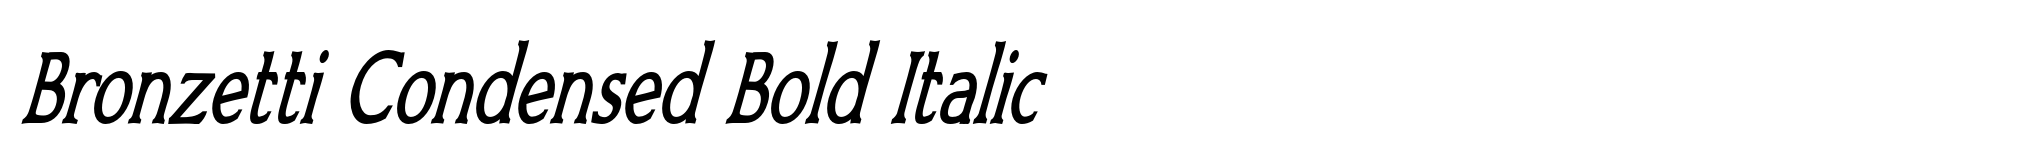 Bronzetti Condensed Bold Italic image